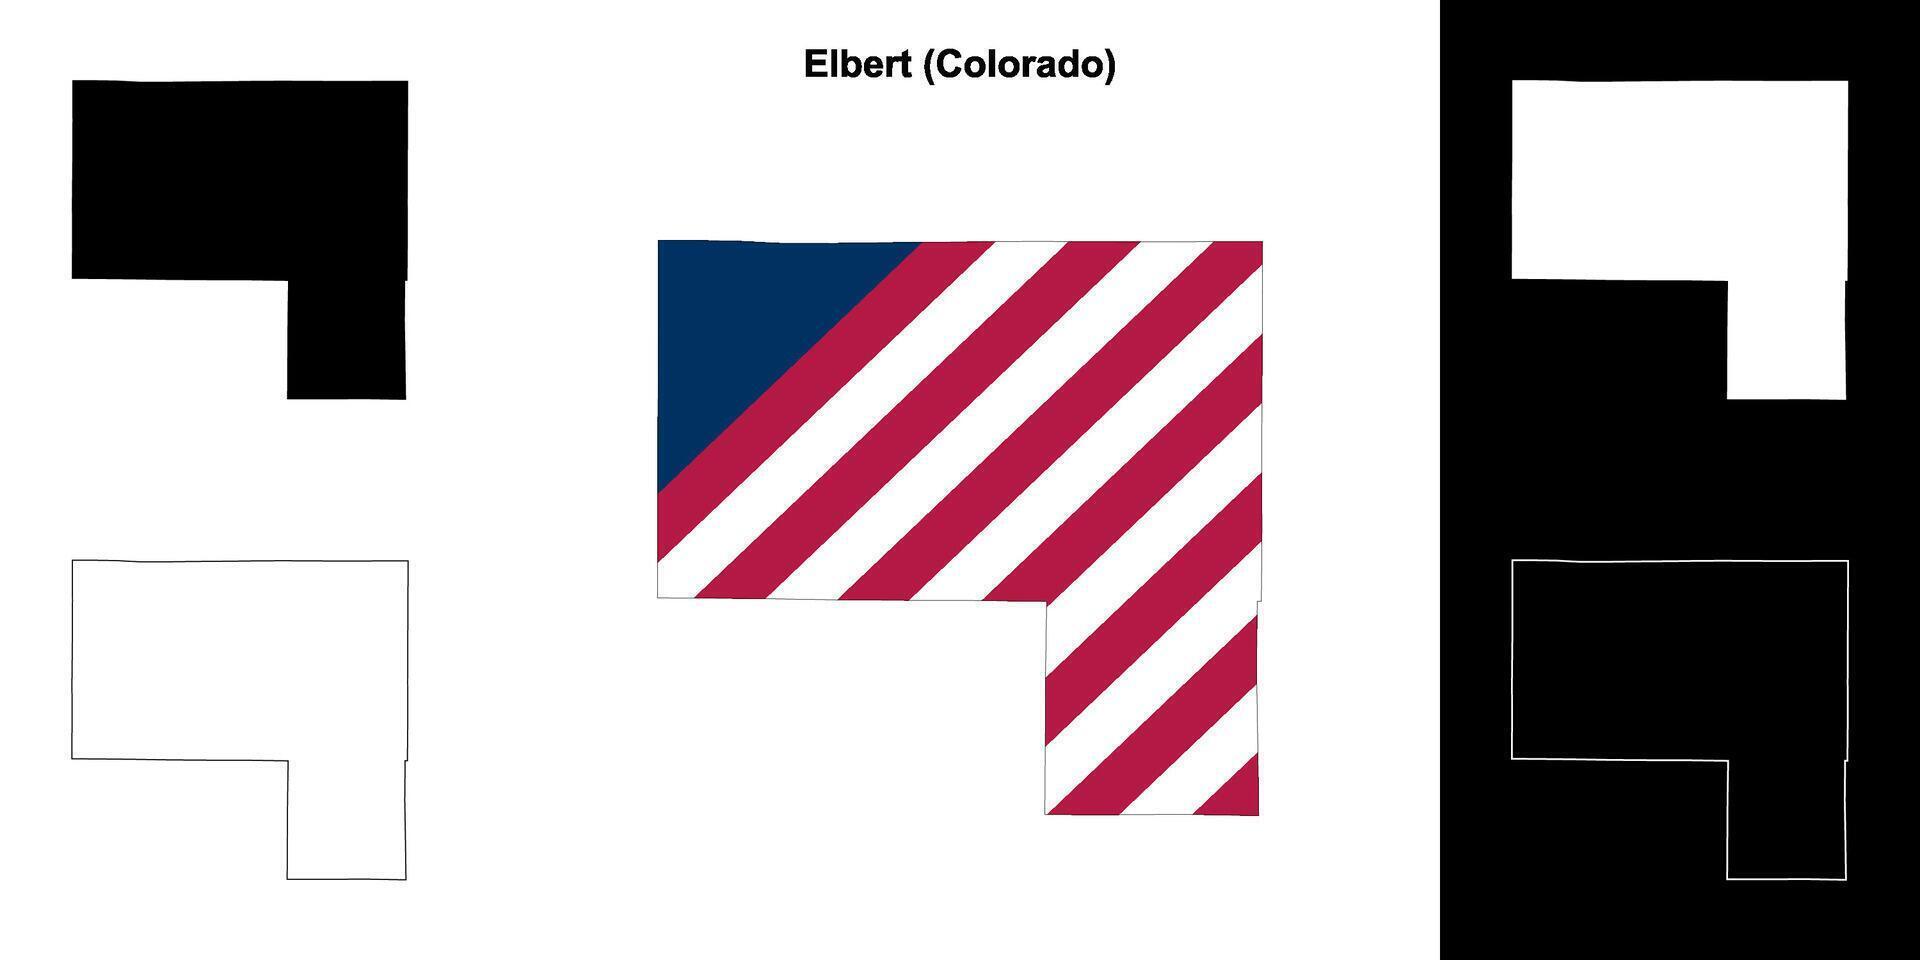 elbert contea, Colorado schema carta geografica impostato vettore